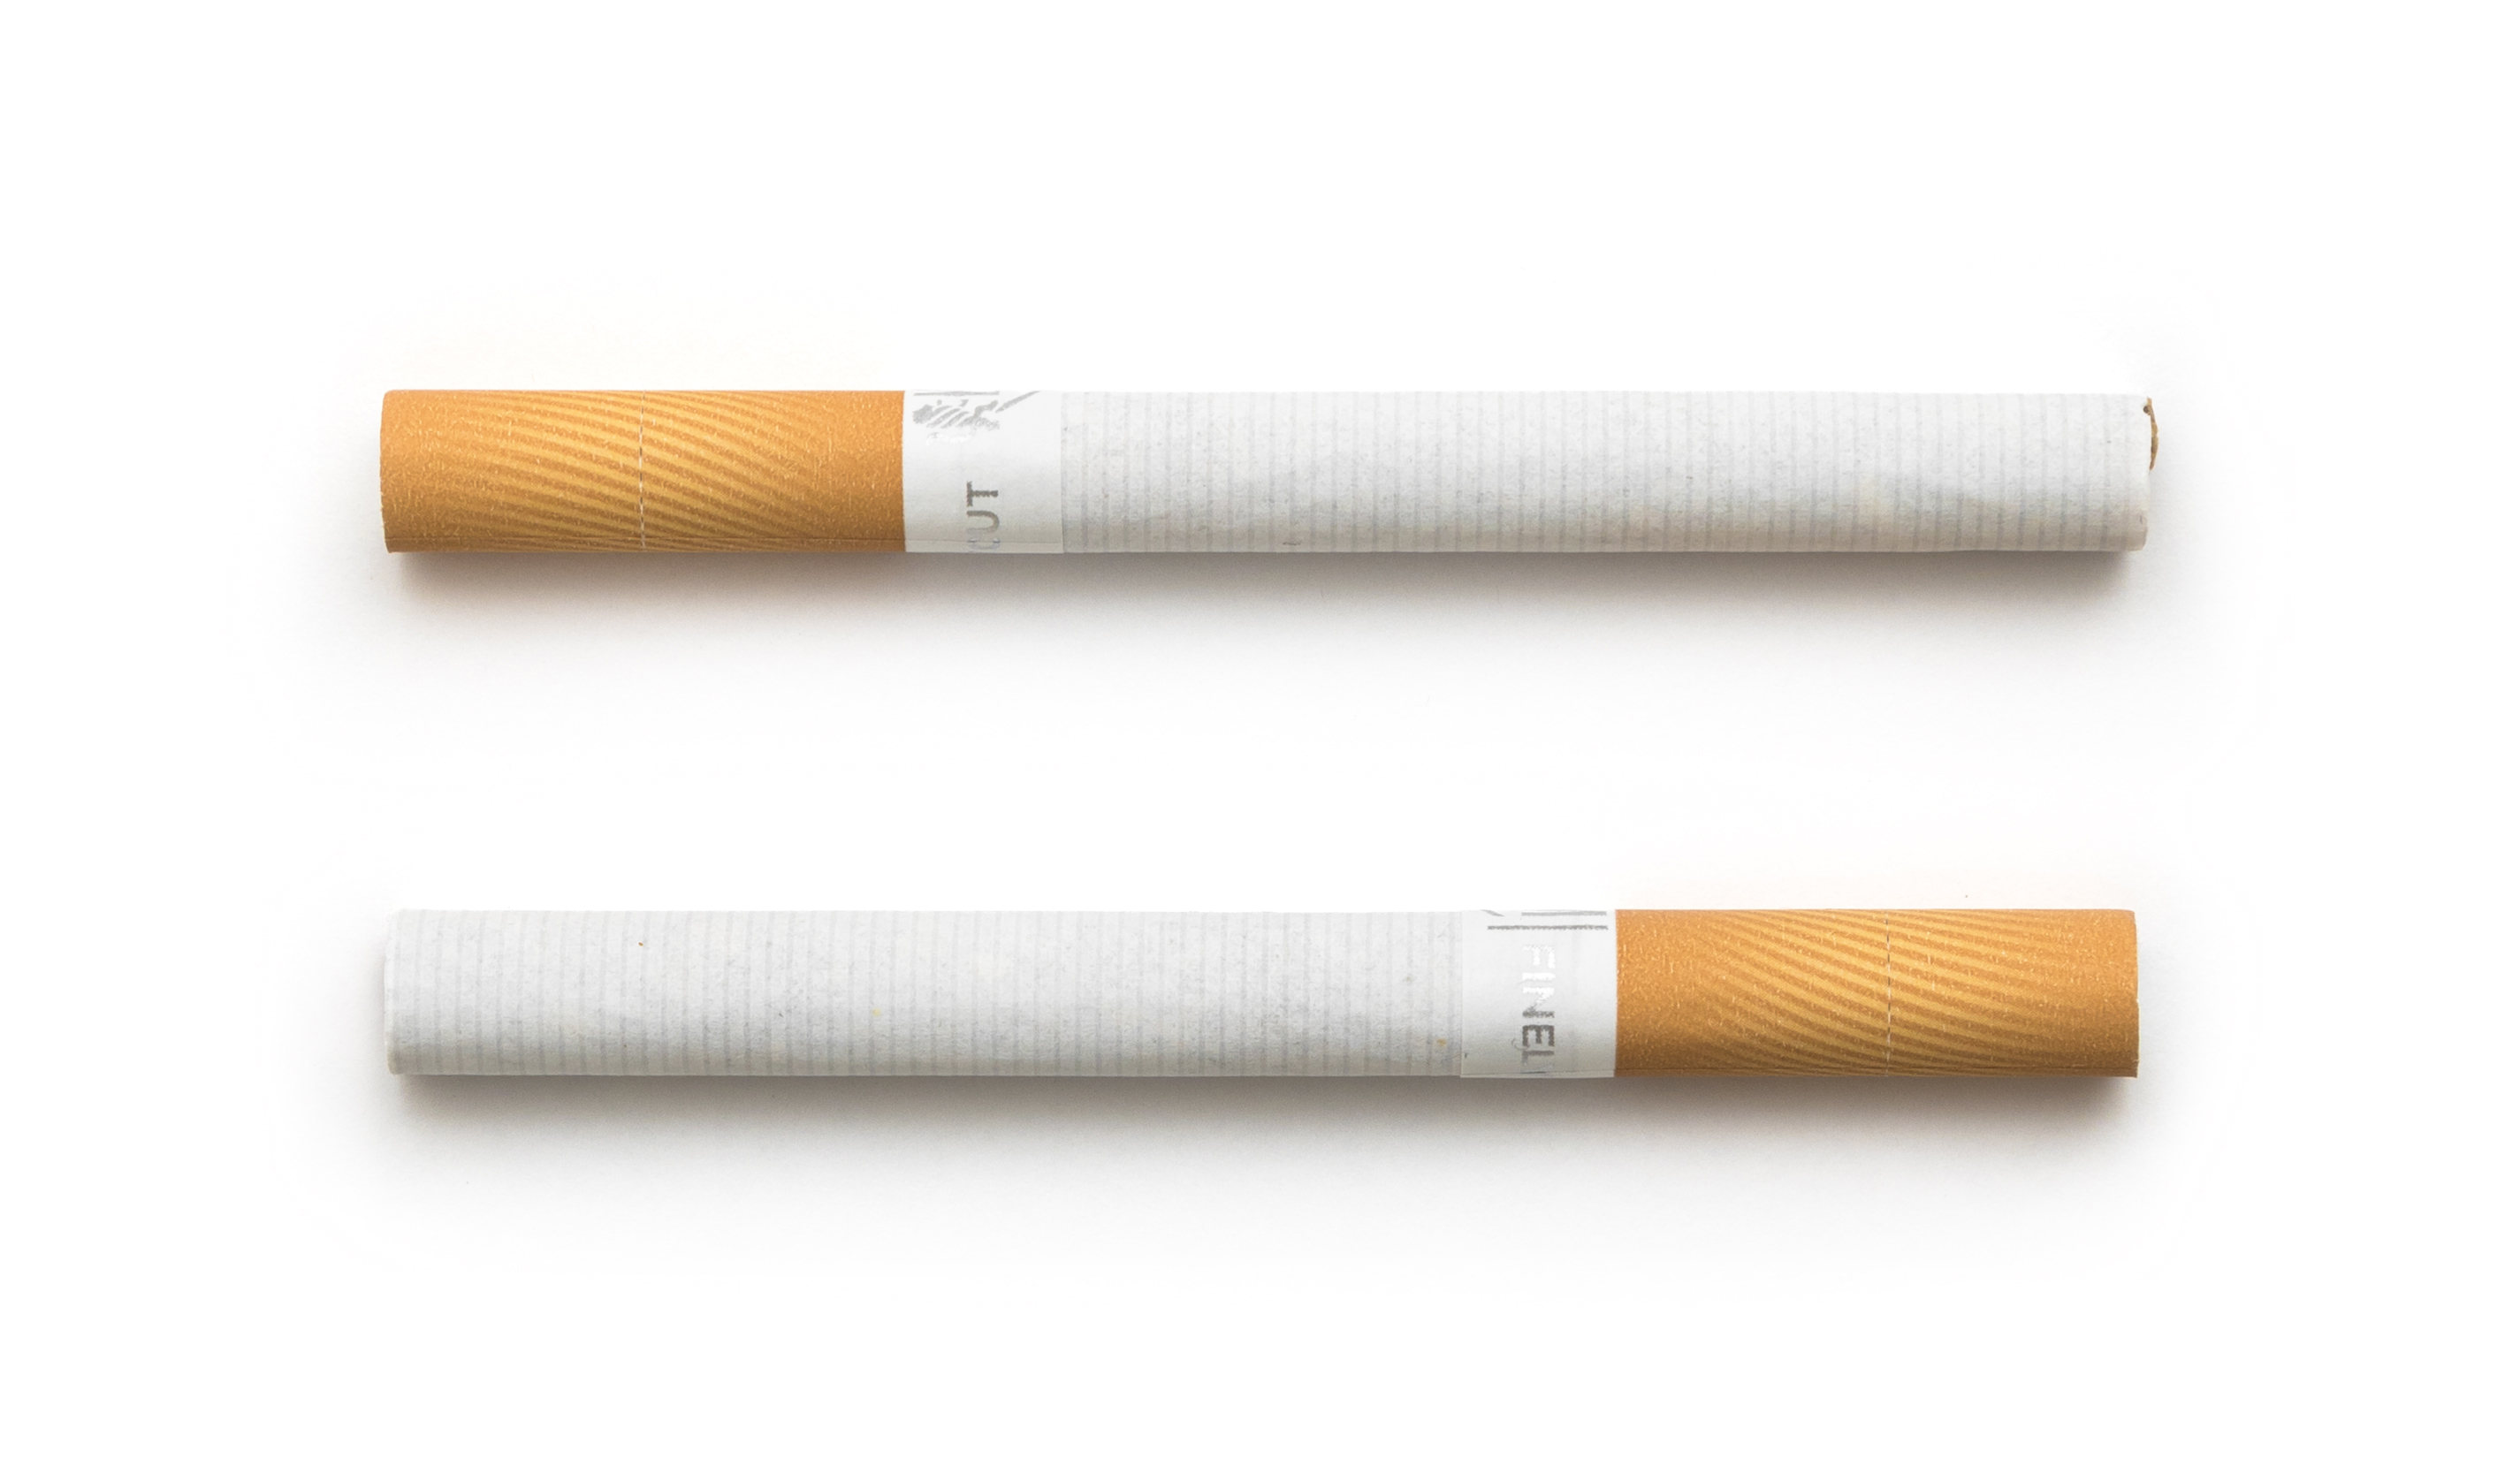 https://upload.wikimedia.org/wikipedia/commons/a/a0/L%26M_Finely_Cut_cigarettes_01.jpg